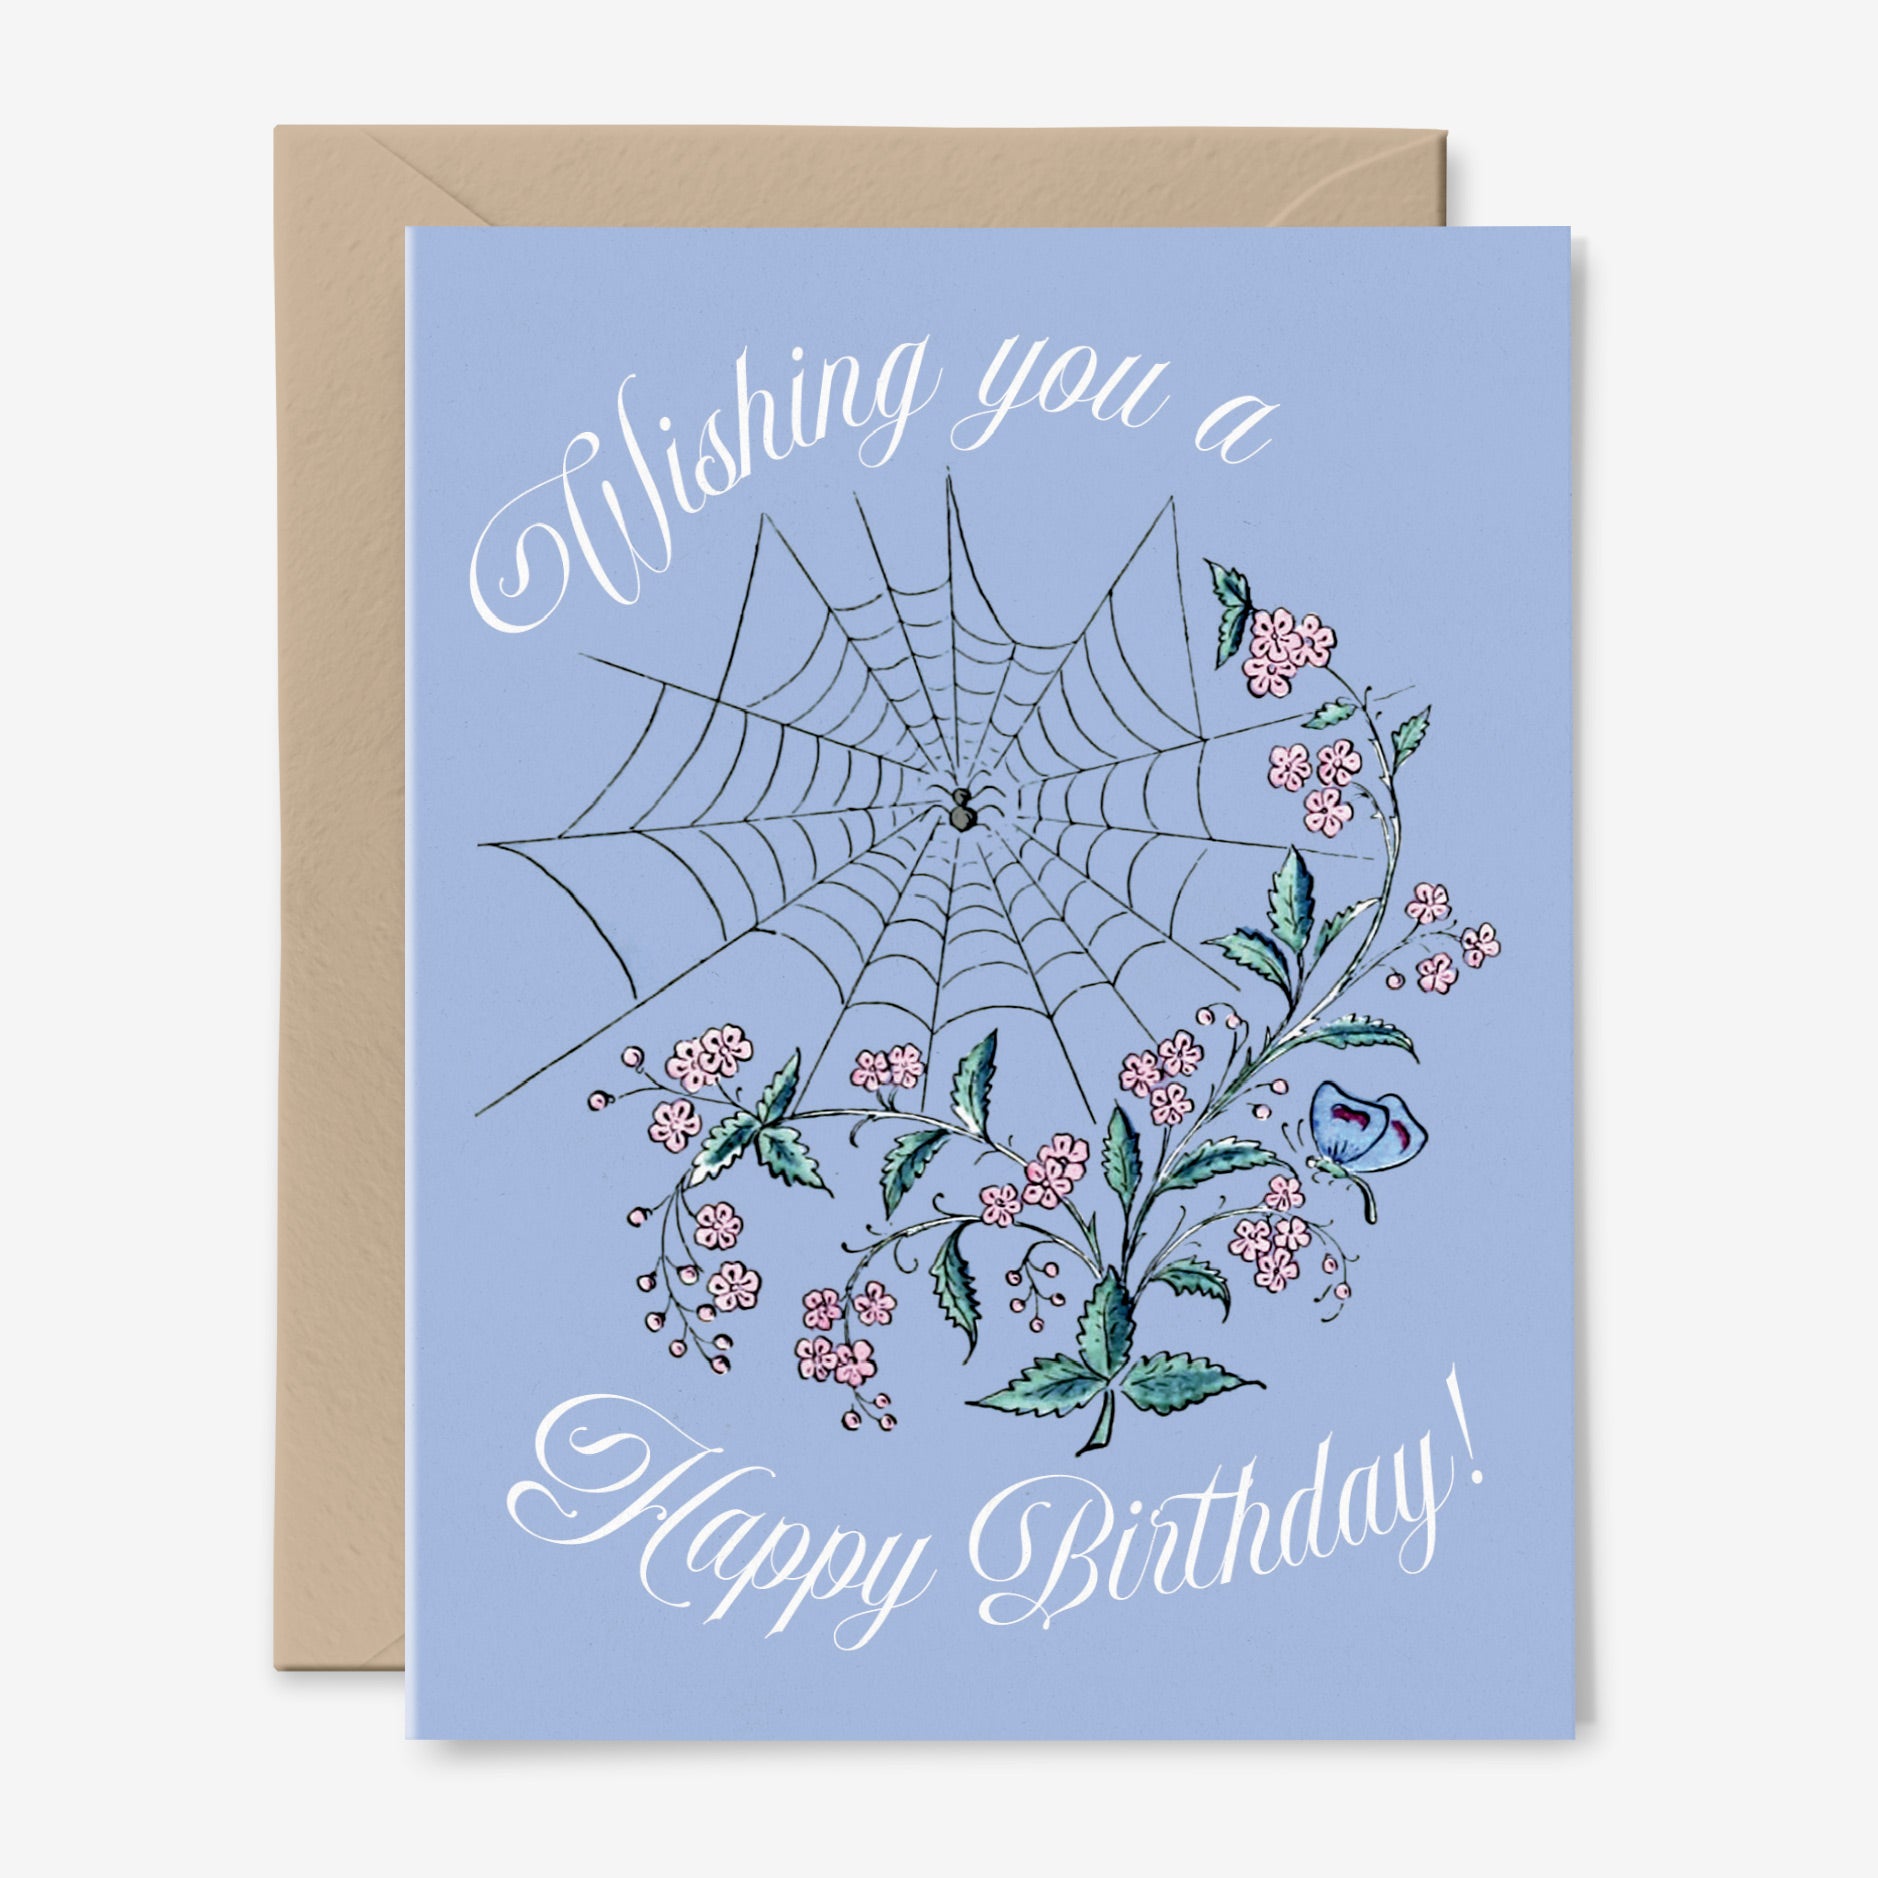 Wishing You A Happy Birthday Card